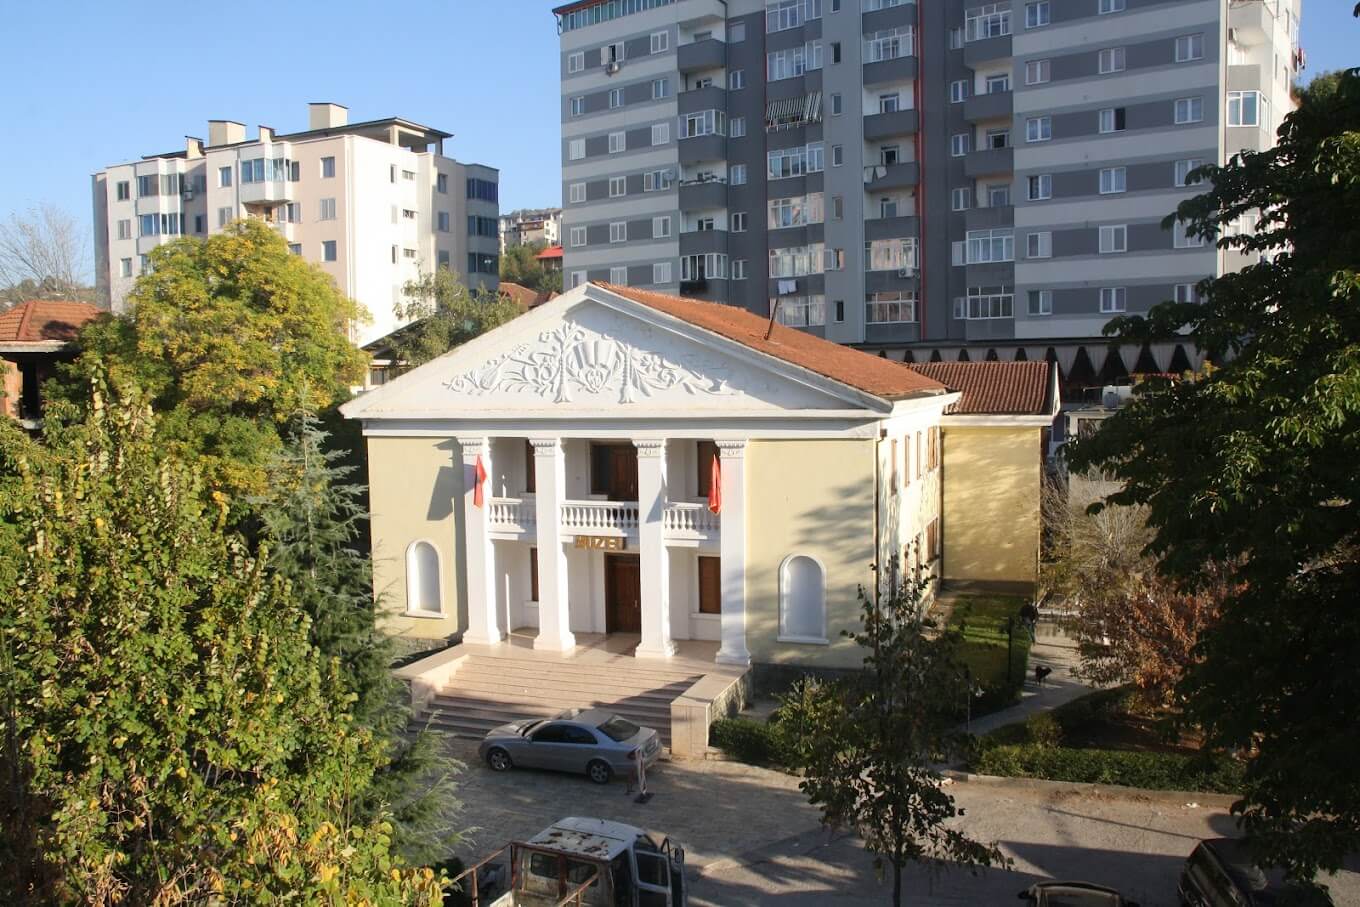 Muzeu i Dibrës , diber, visit albania, travel, culture, shqiperi, kulture